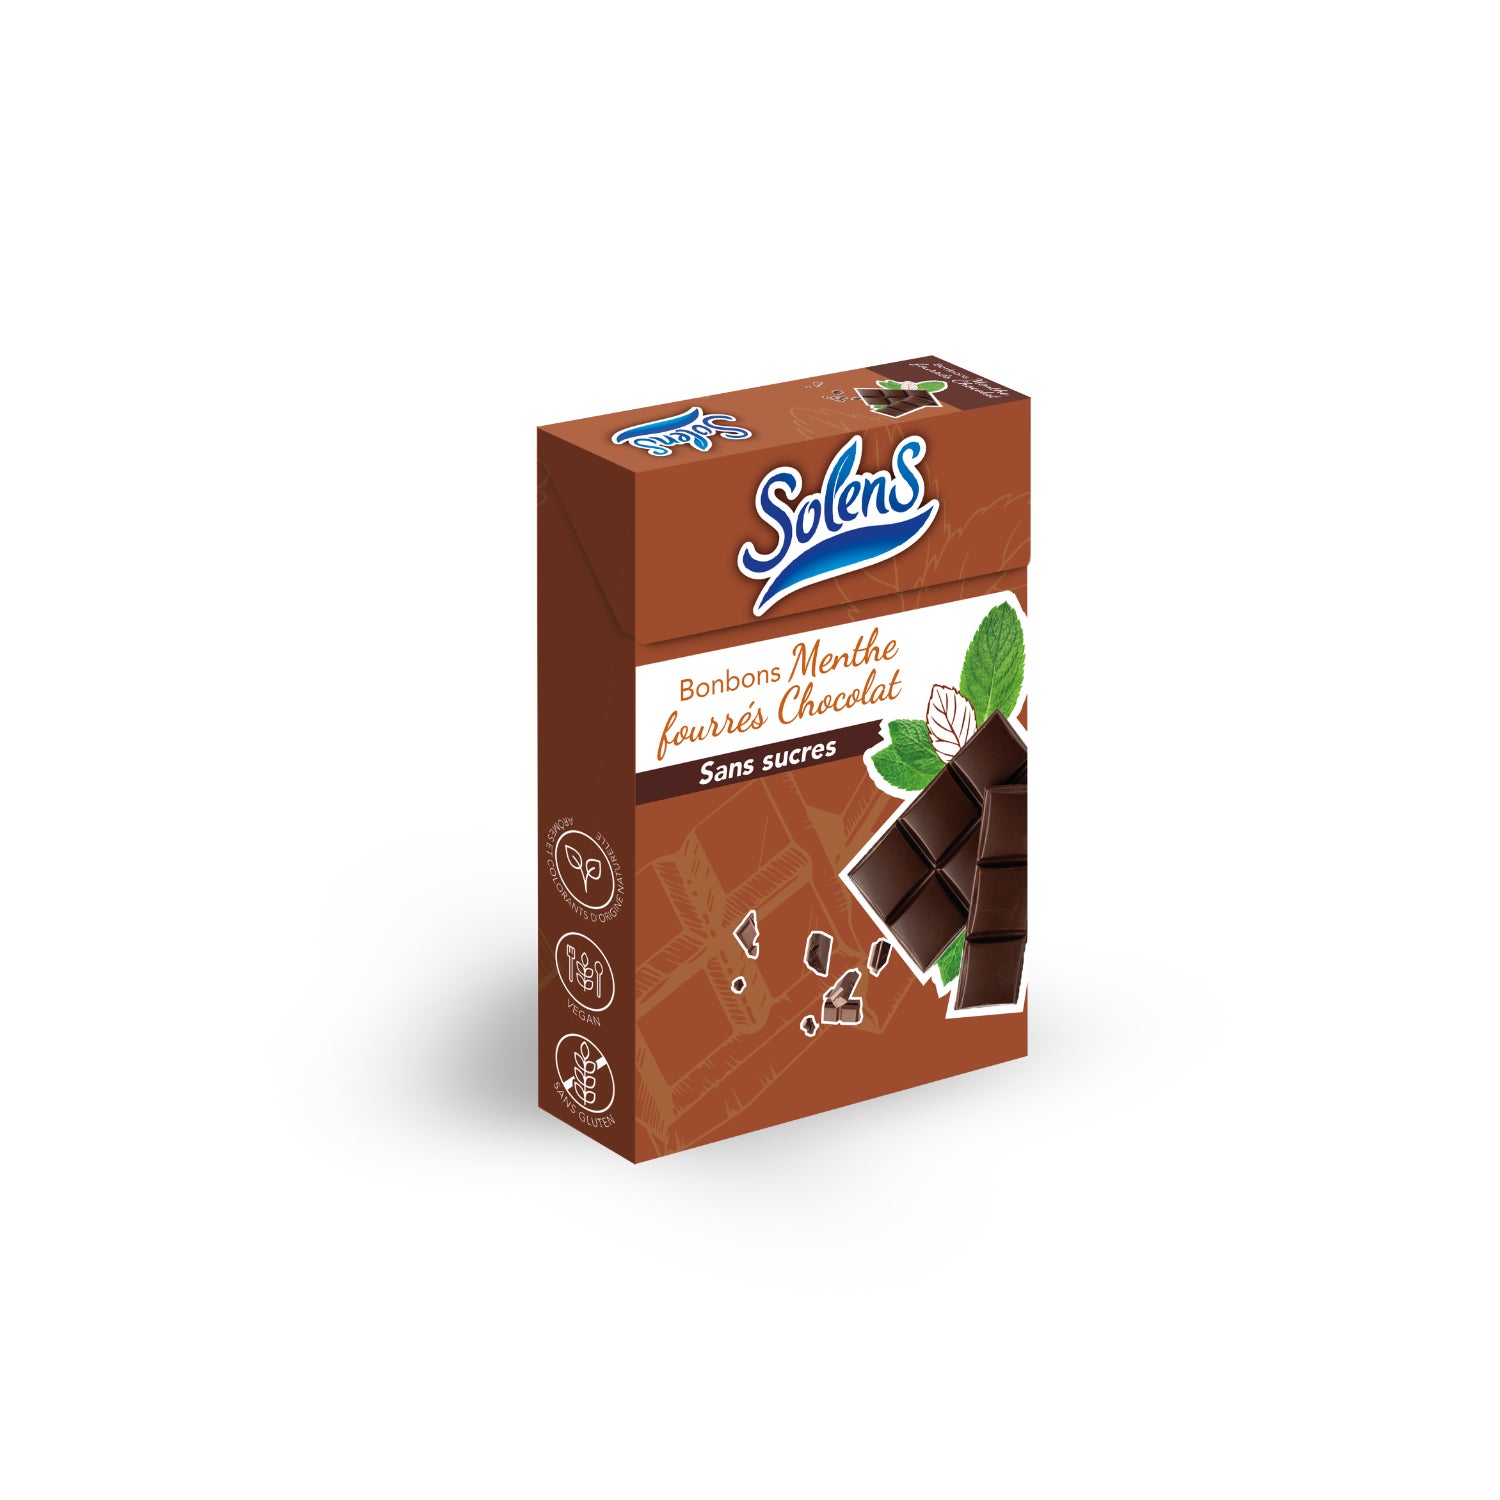 Yeux en bonbon (24) — Chocolats Favoris